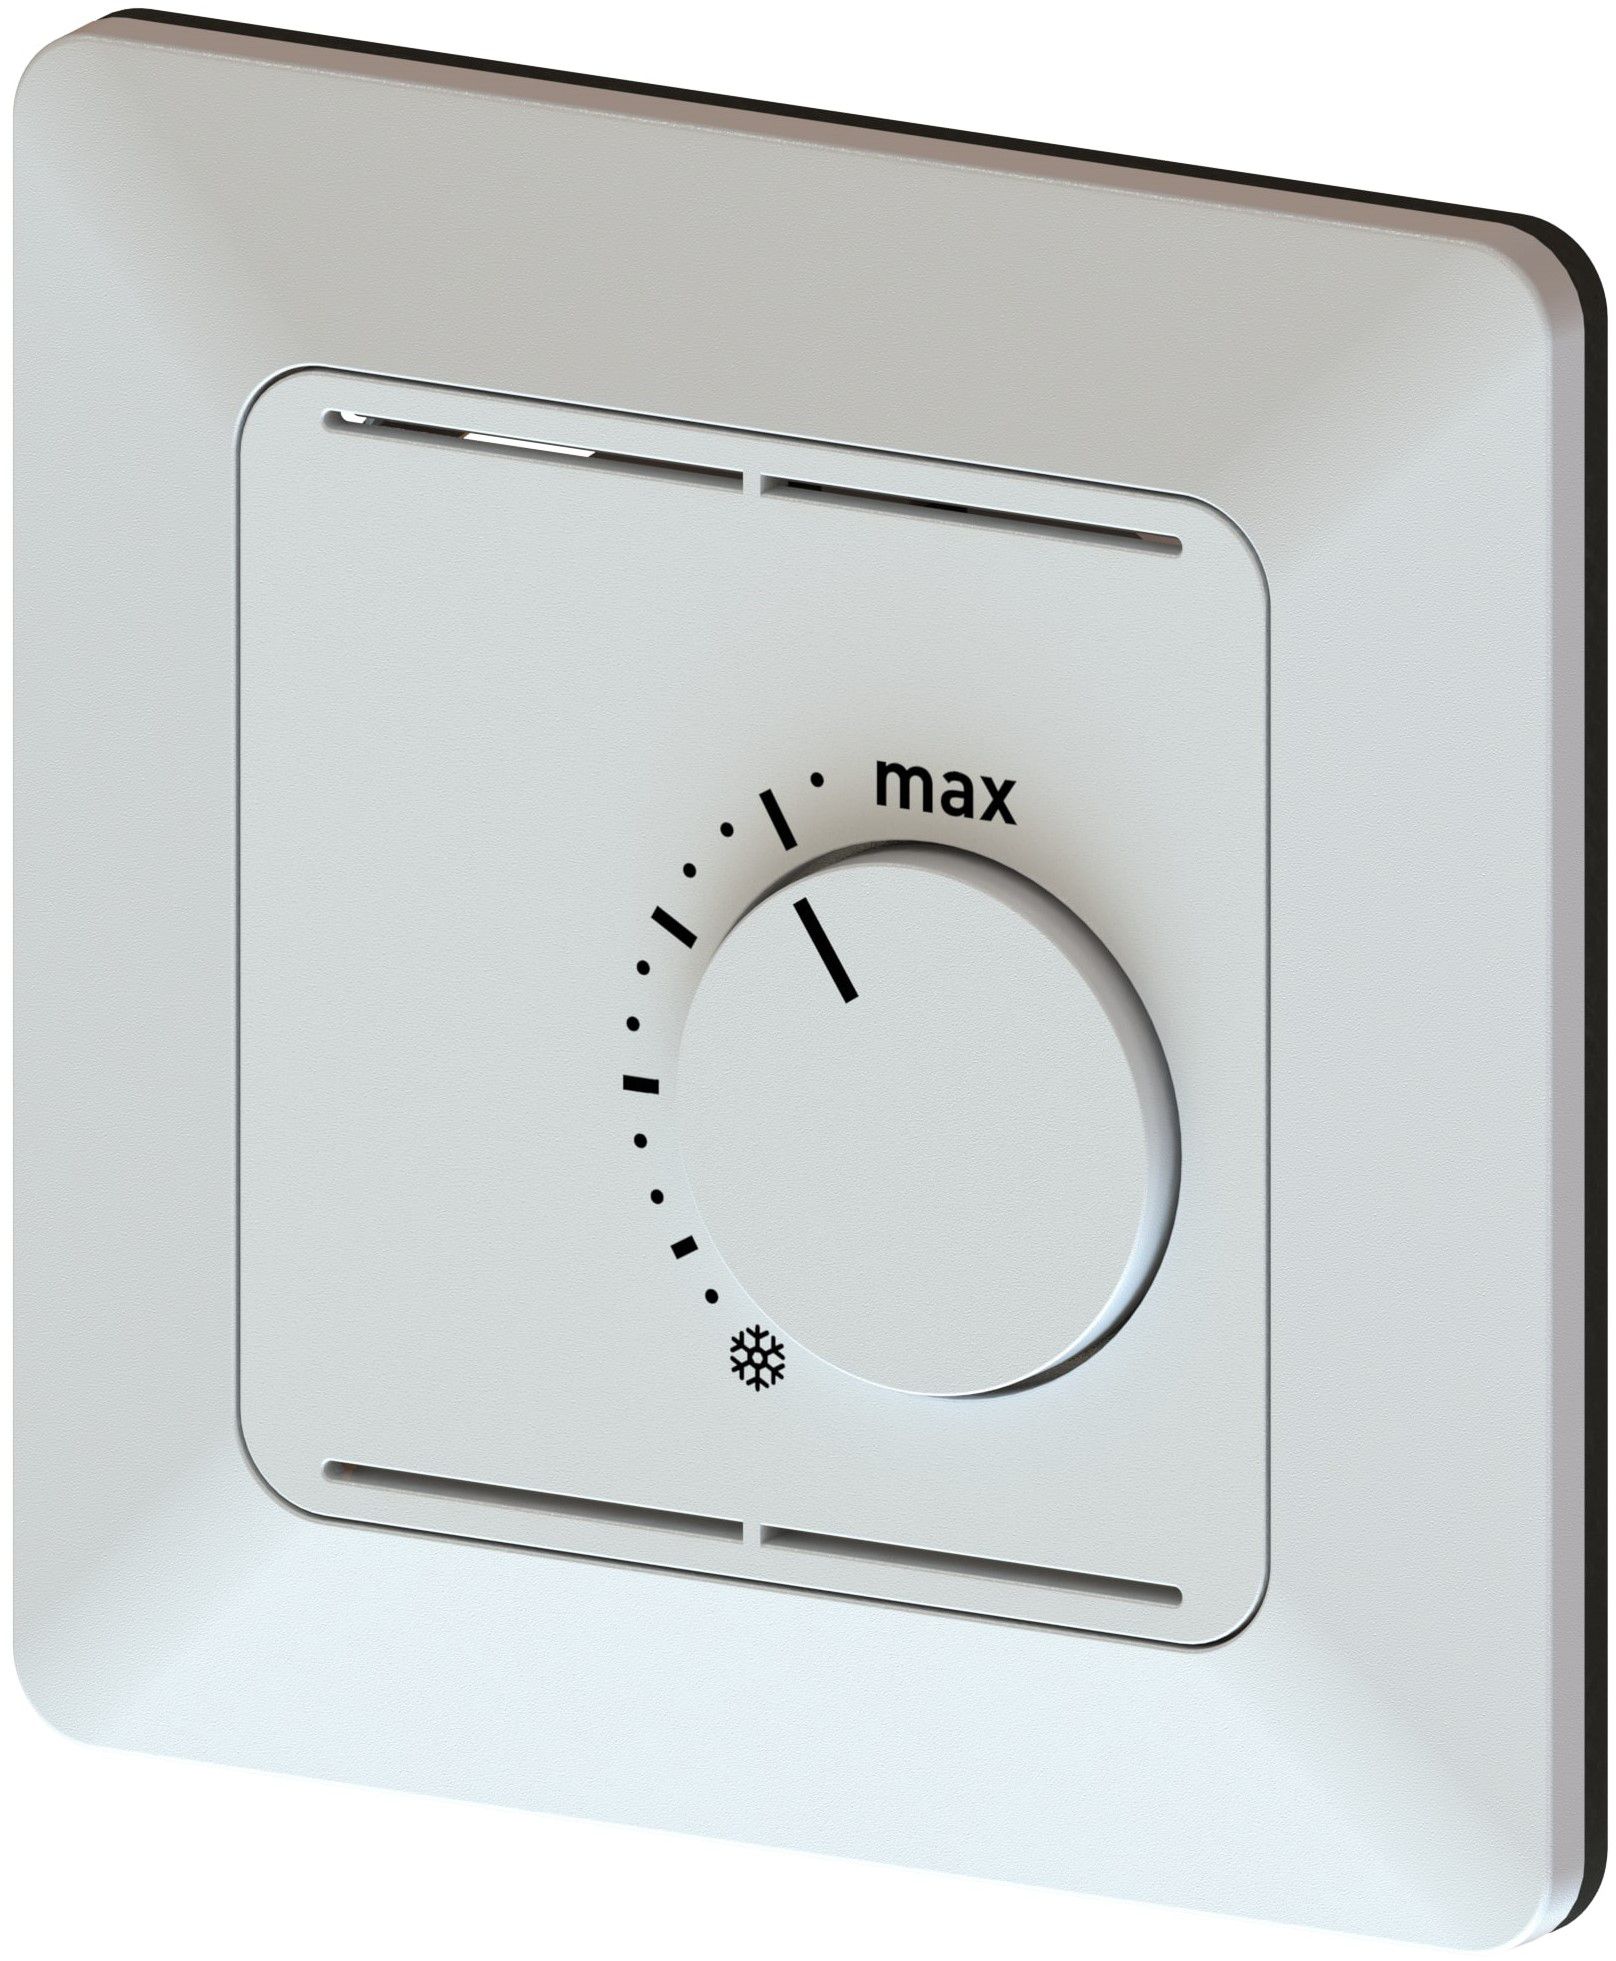 thermostat d'ambiance ENC priamos blanc